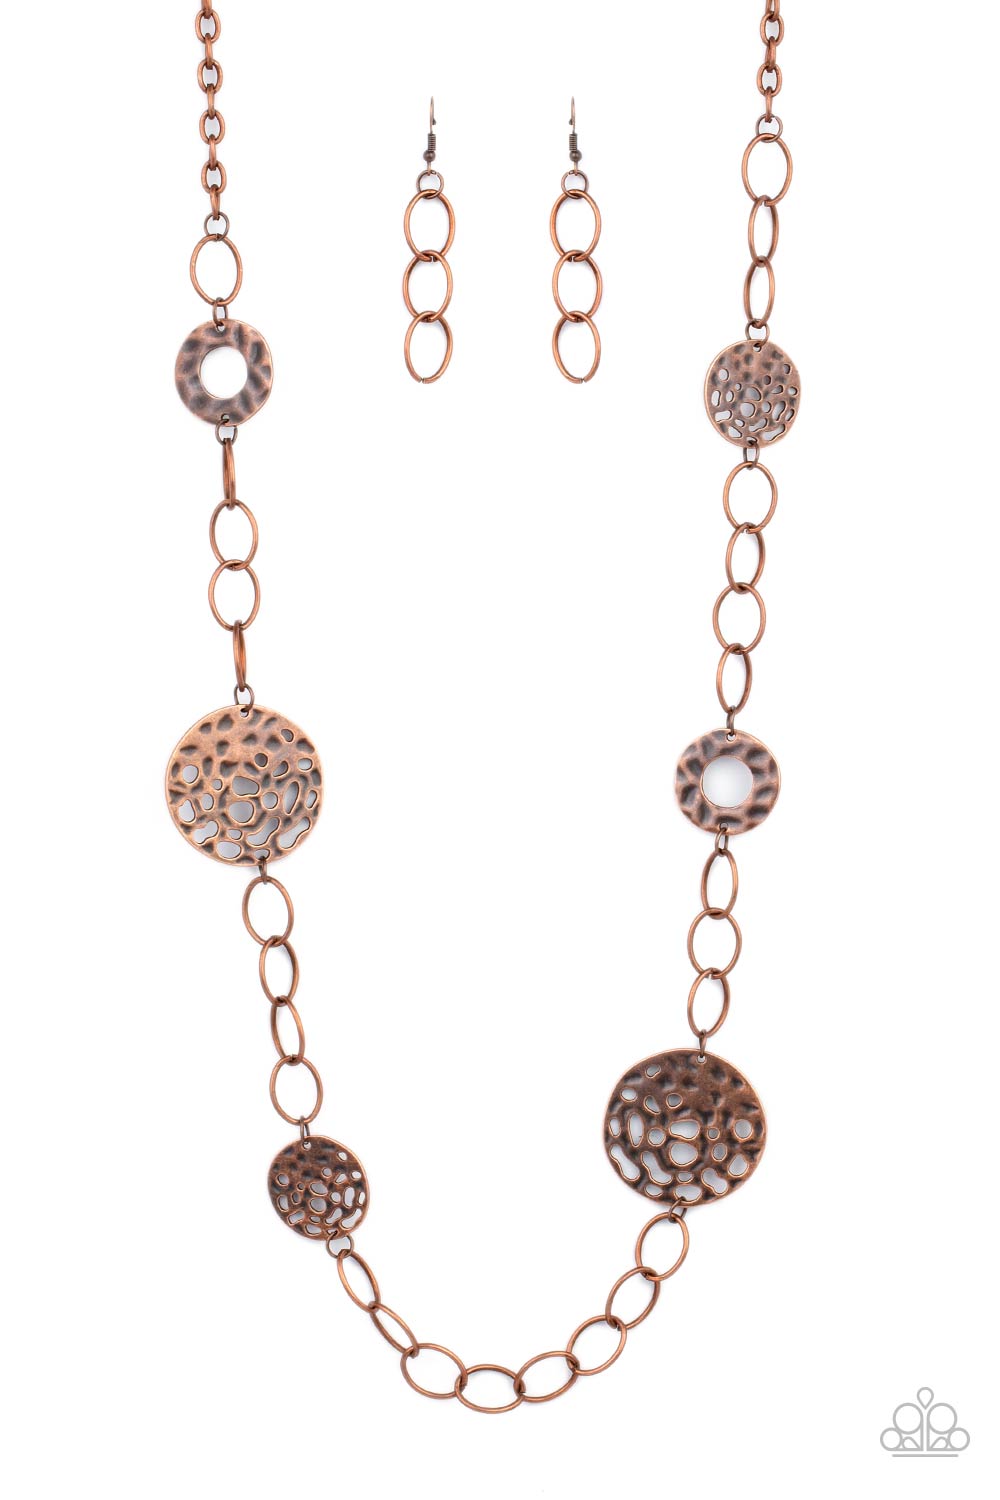 HOLEY Relic - Copper Necklace freeshipping - JewLz4u Gemstone Gallery